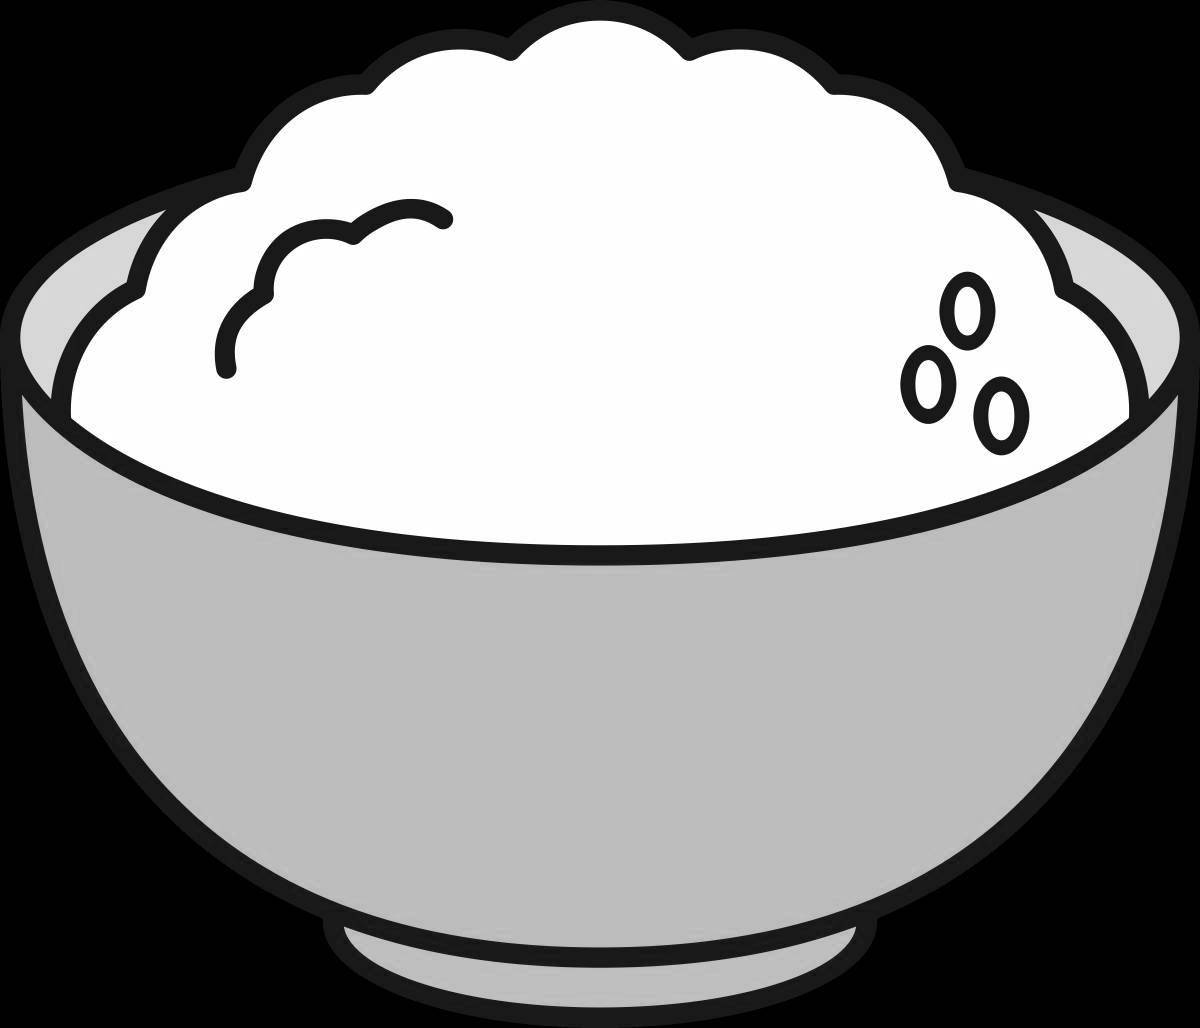 A rich pot of porridge